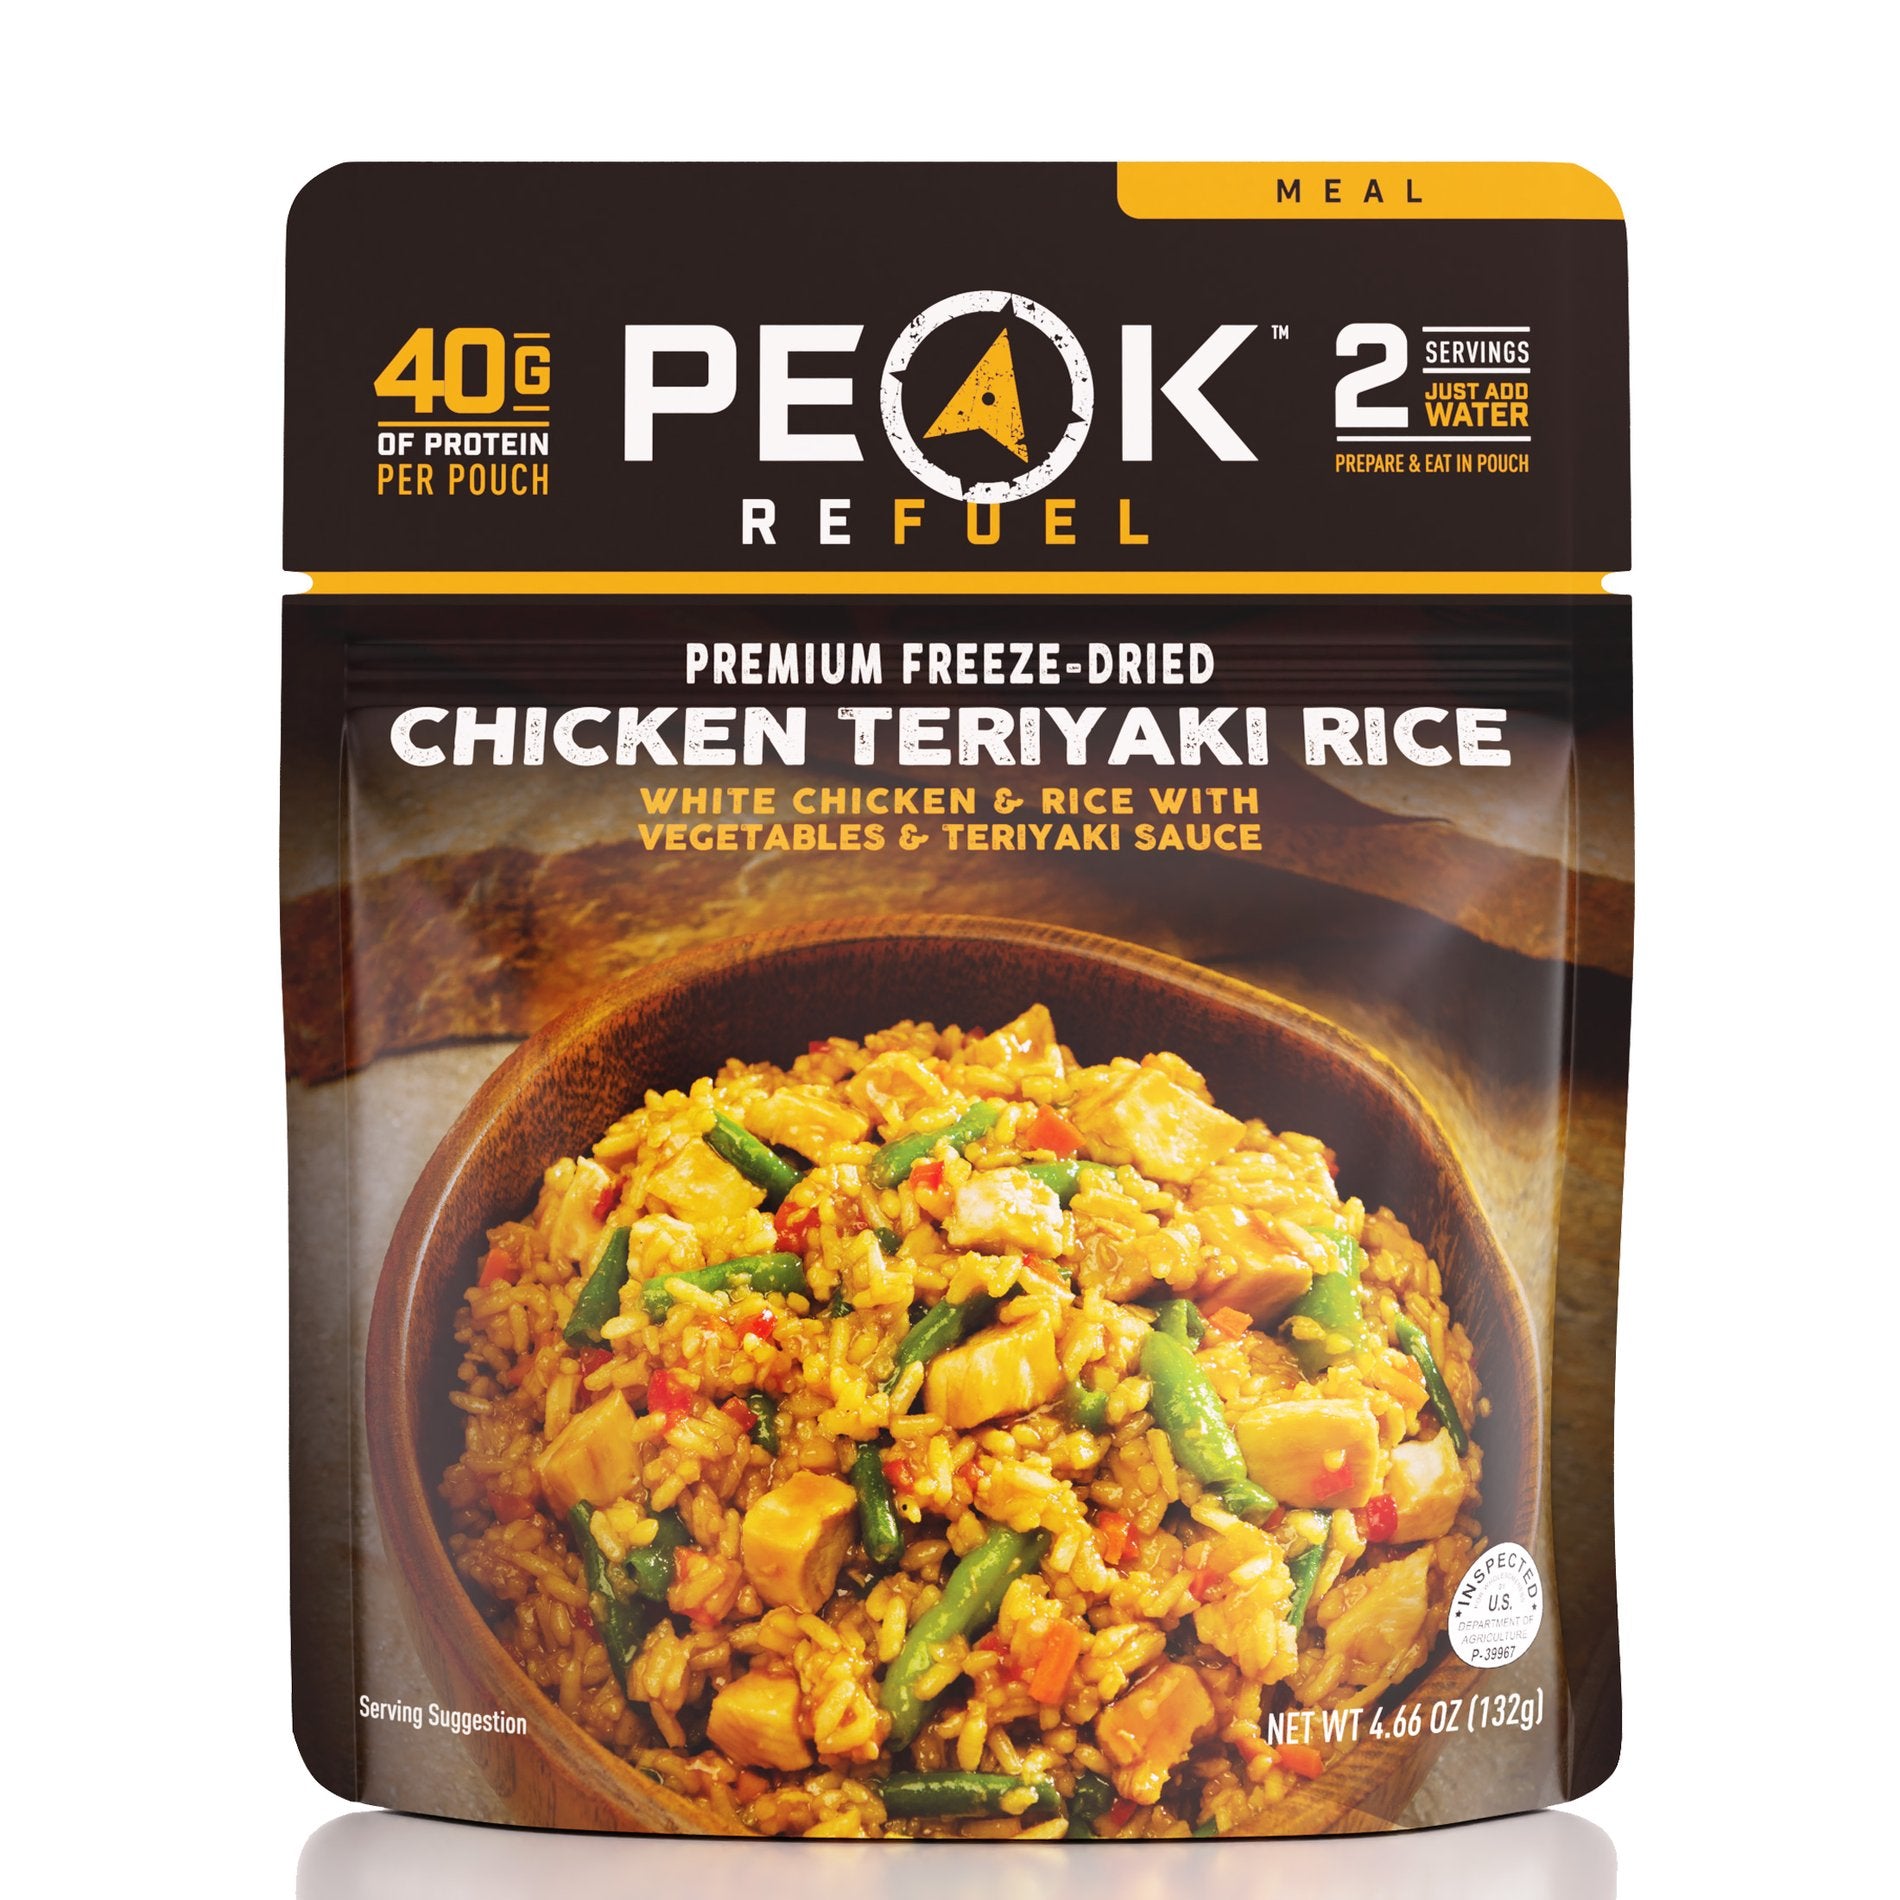 Peak Refuel: Chicken Teriyaki Rice